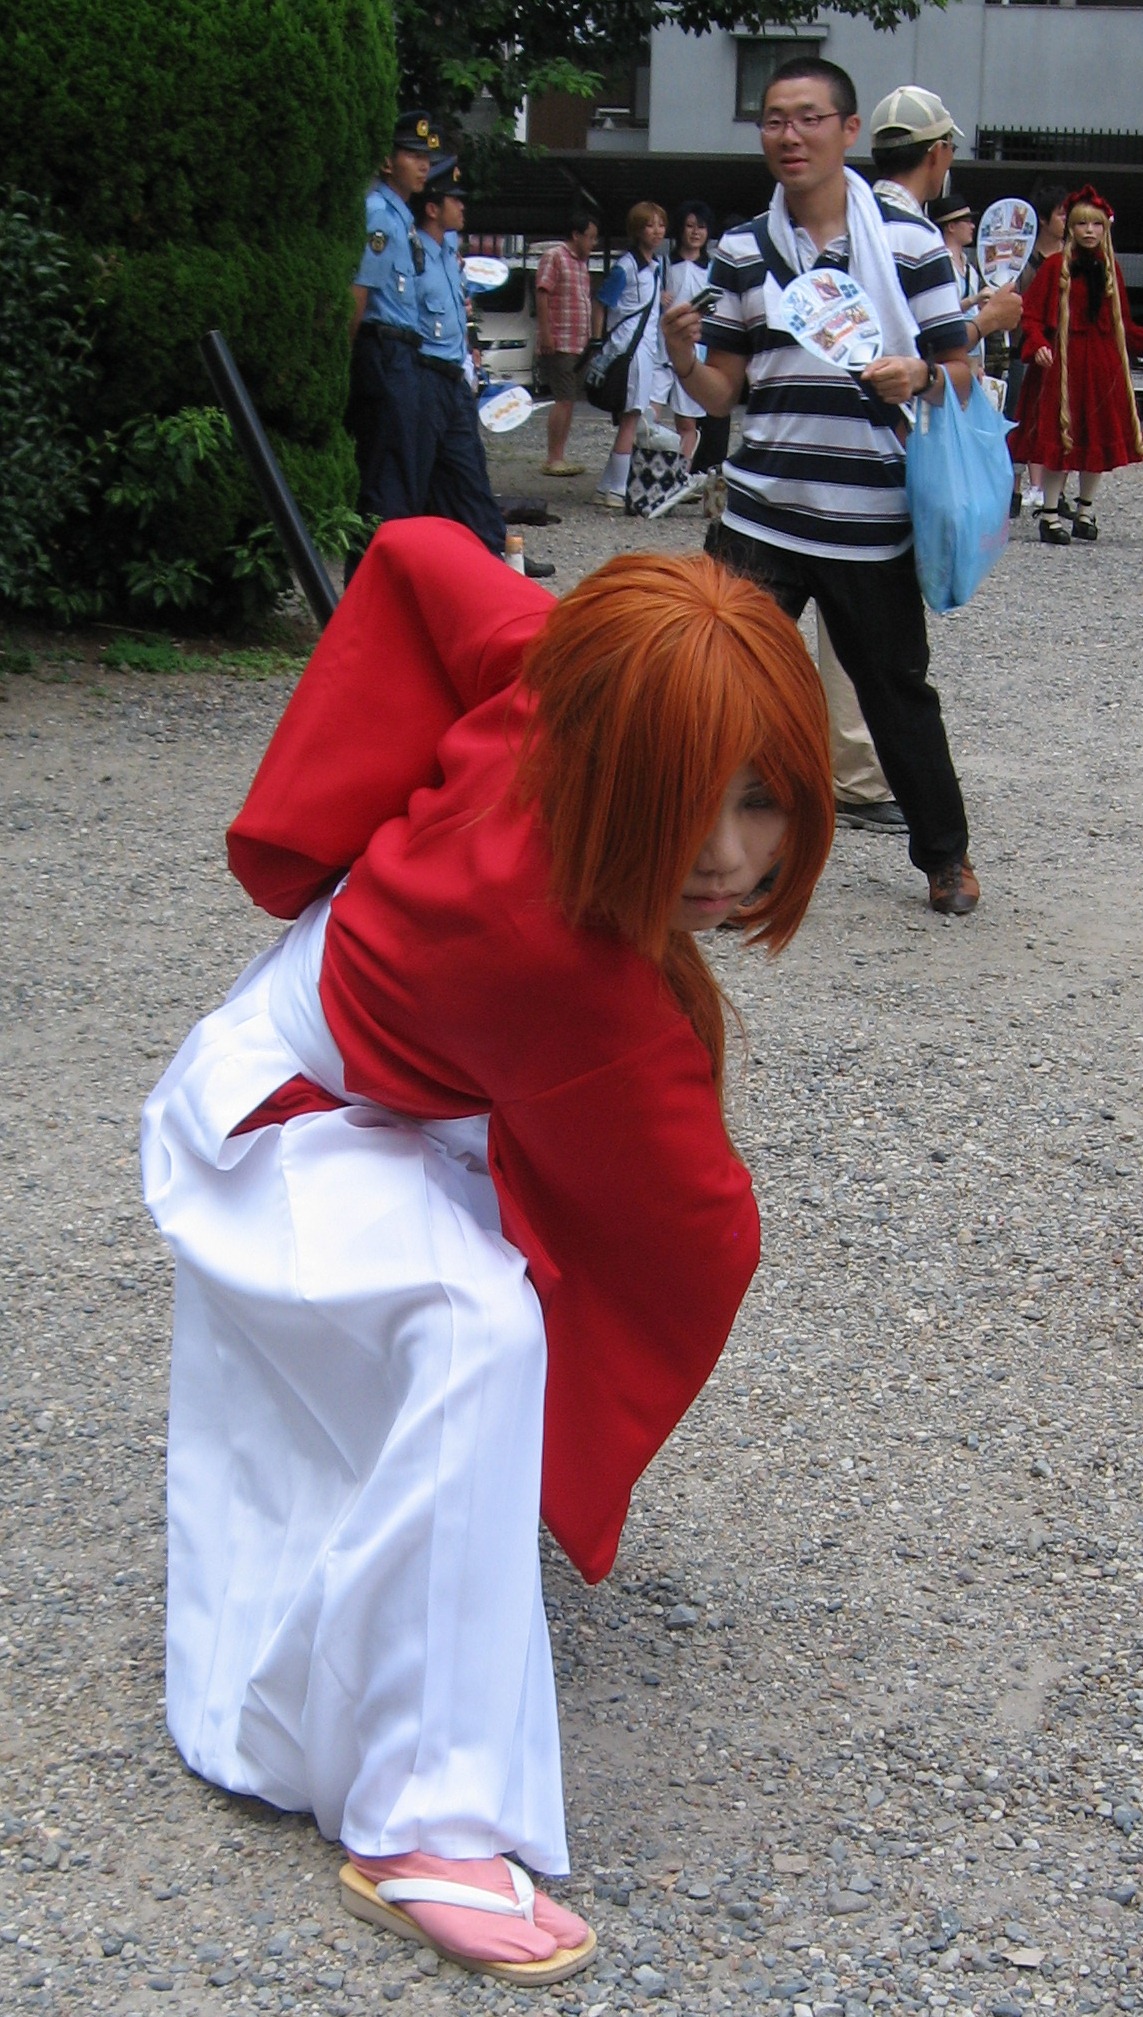 Rurouni Kenshin Himura Kenshin Cosplay Costume Outfits Halloween Carni